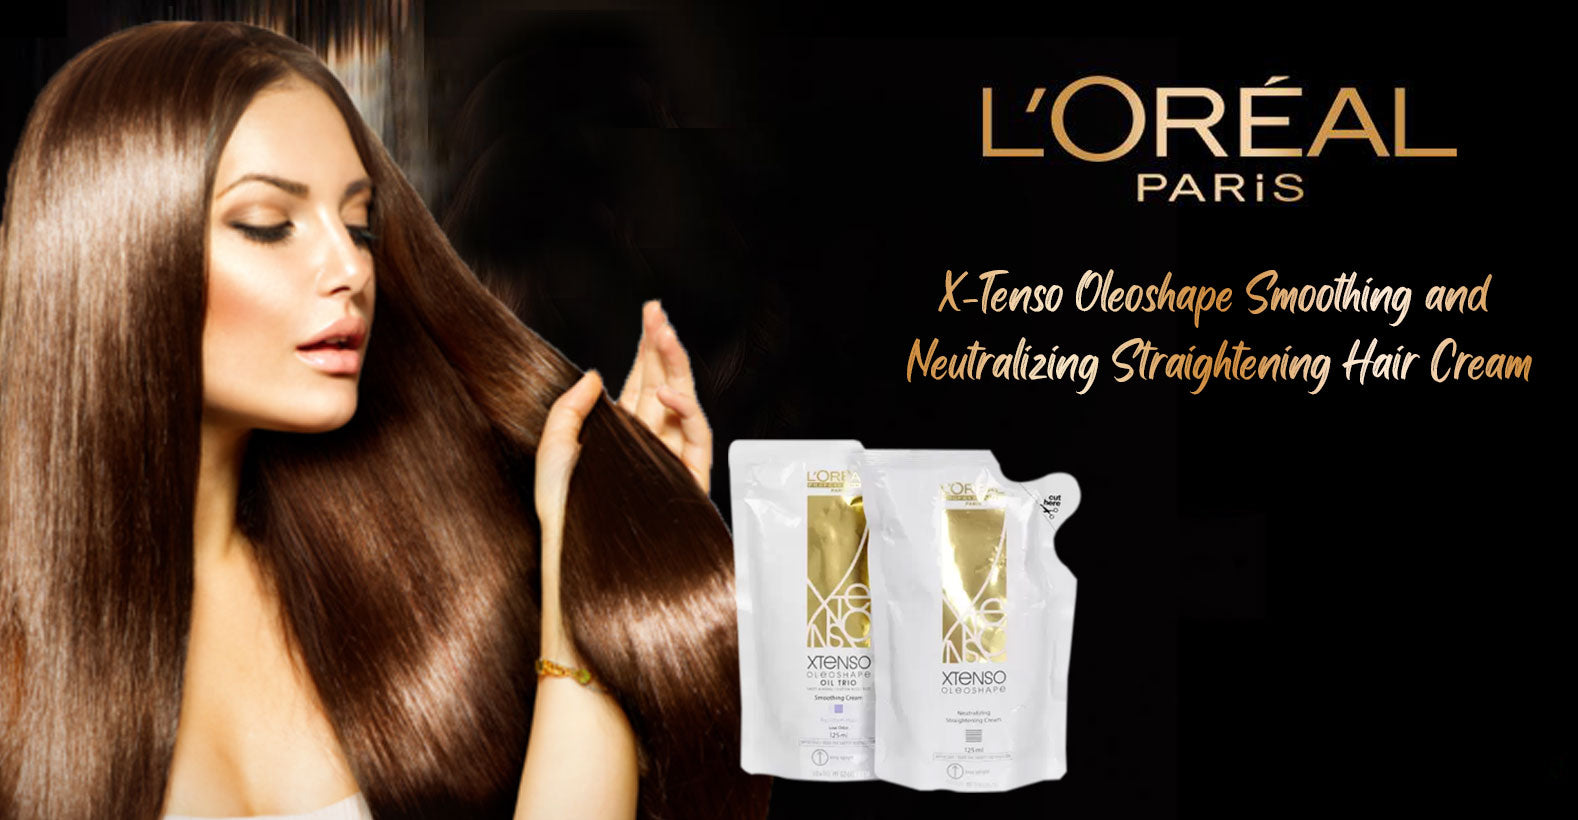 LOreal Paris XTenso Oleoshape Smoothing and Neutralizing Straightening  Hair Cream